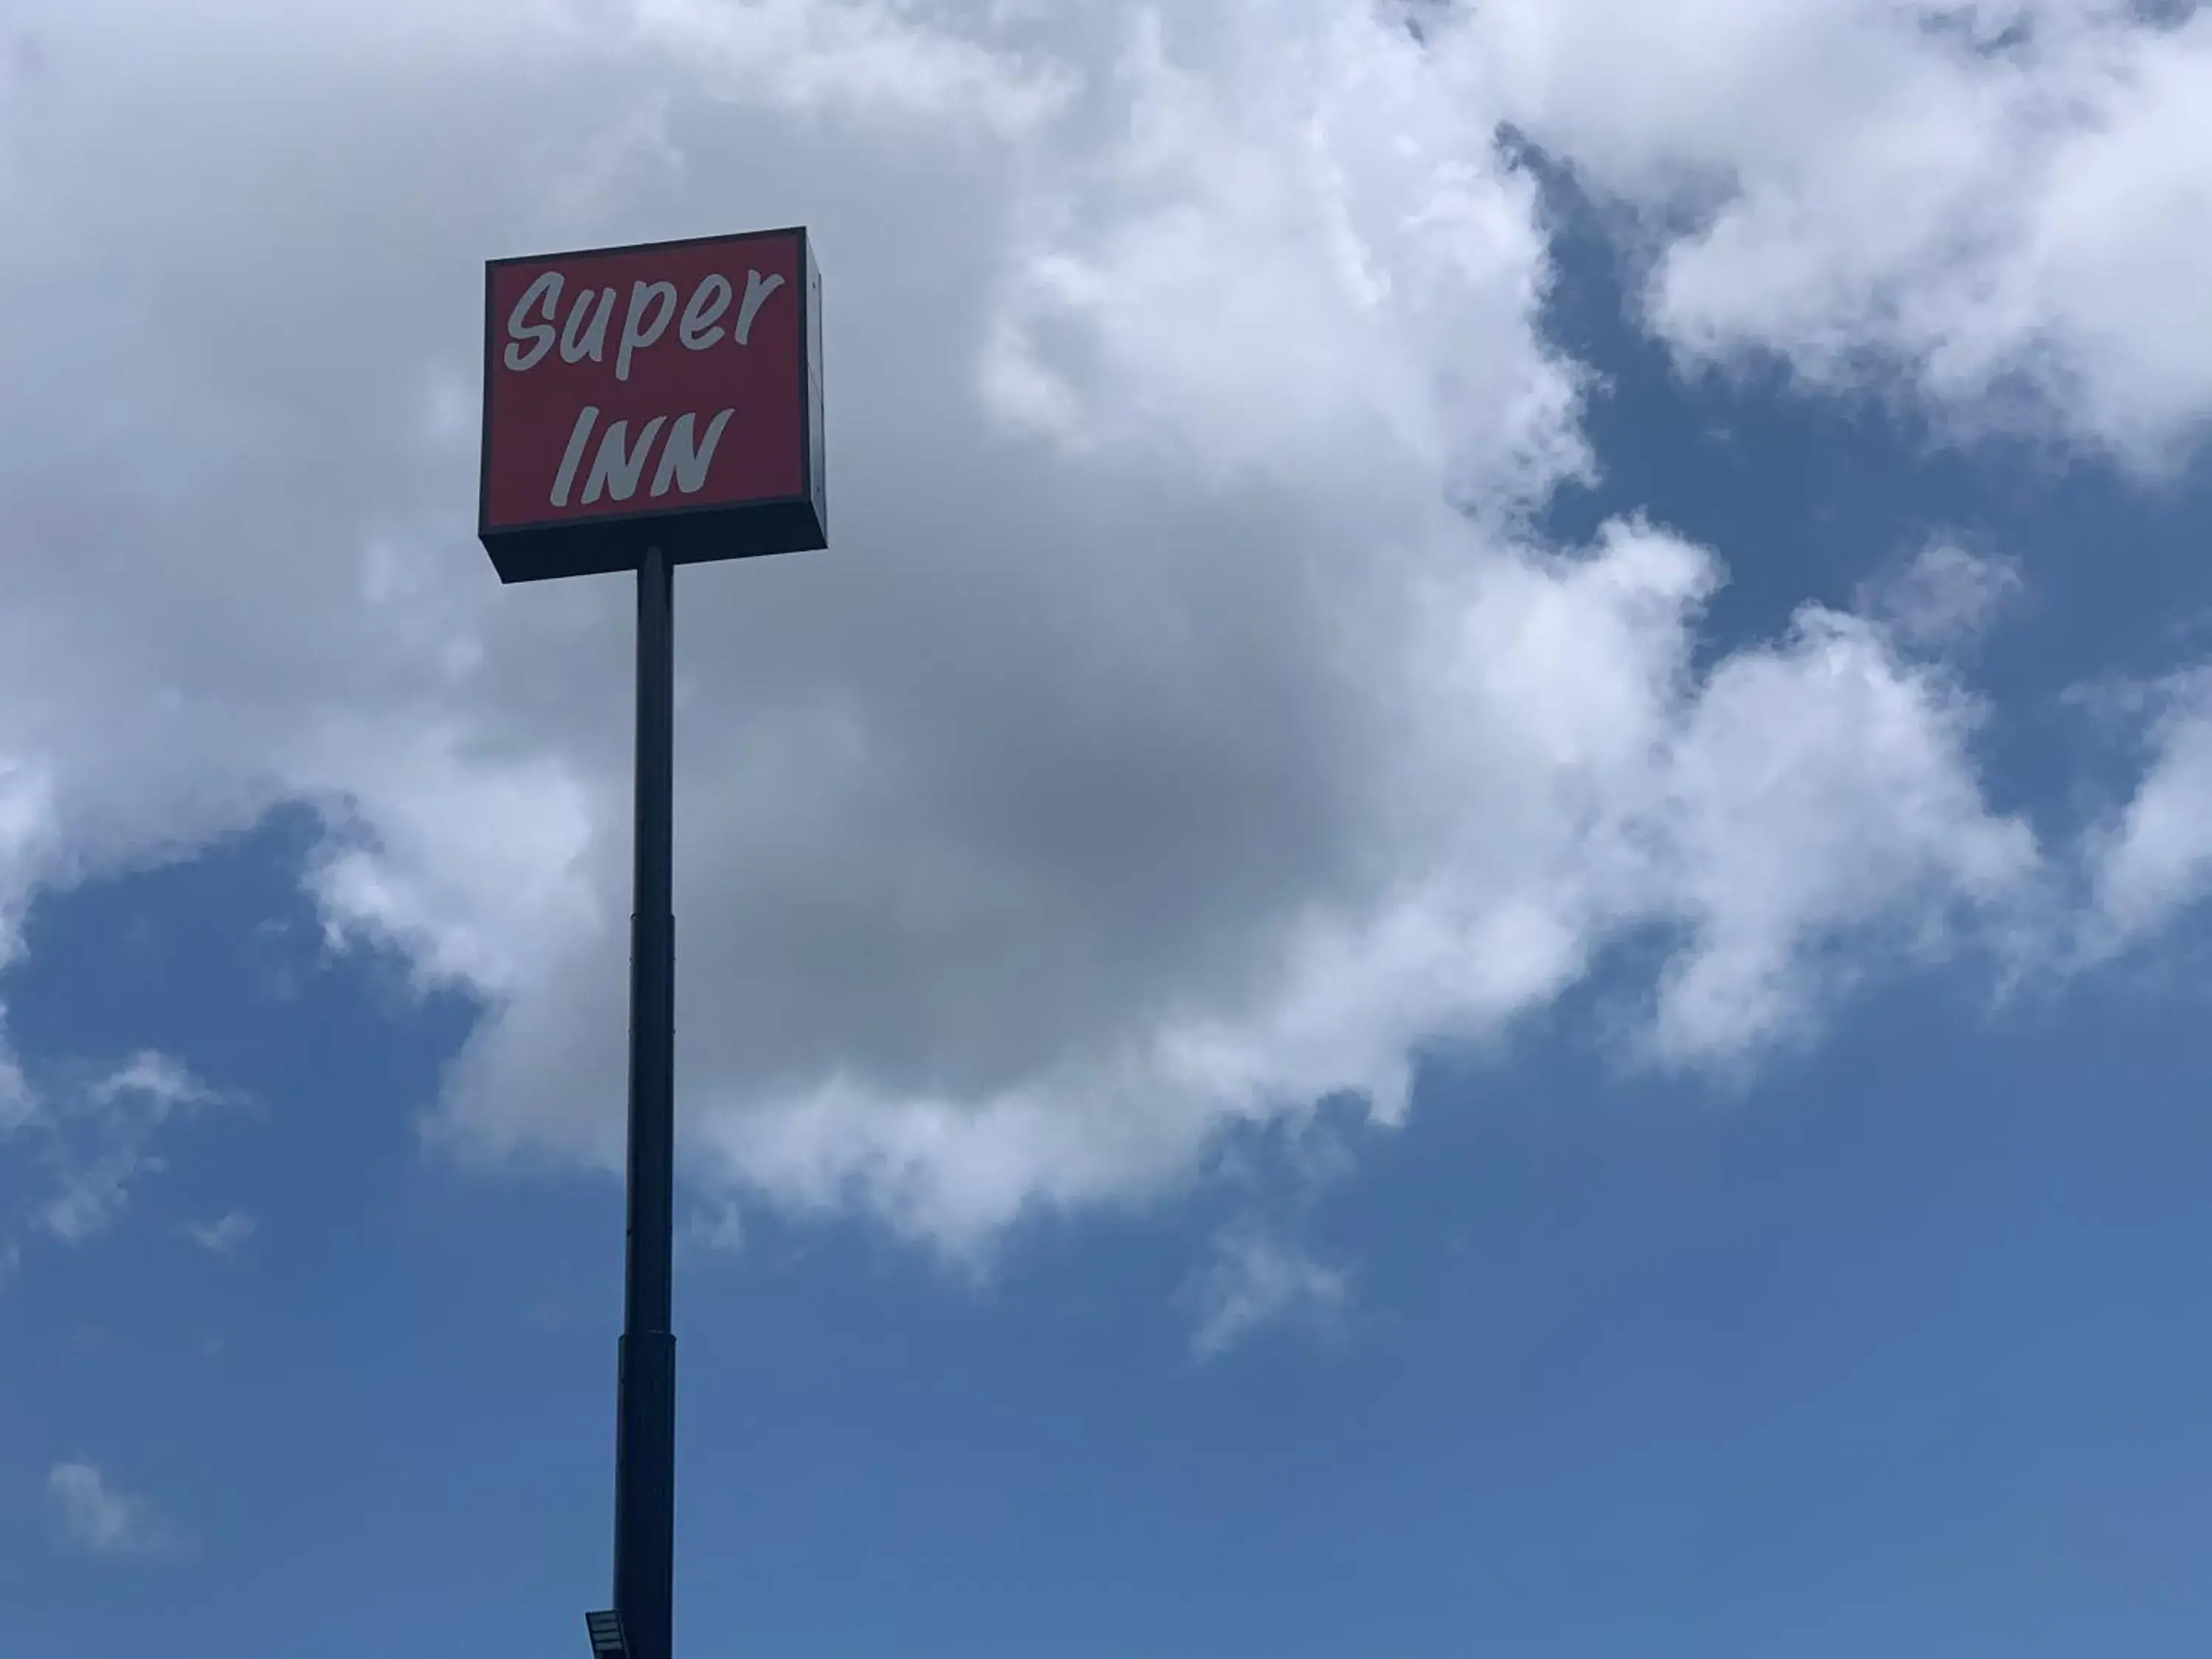 Super Inn